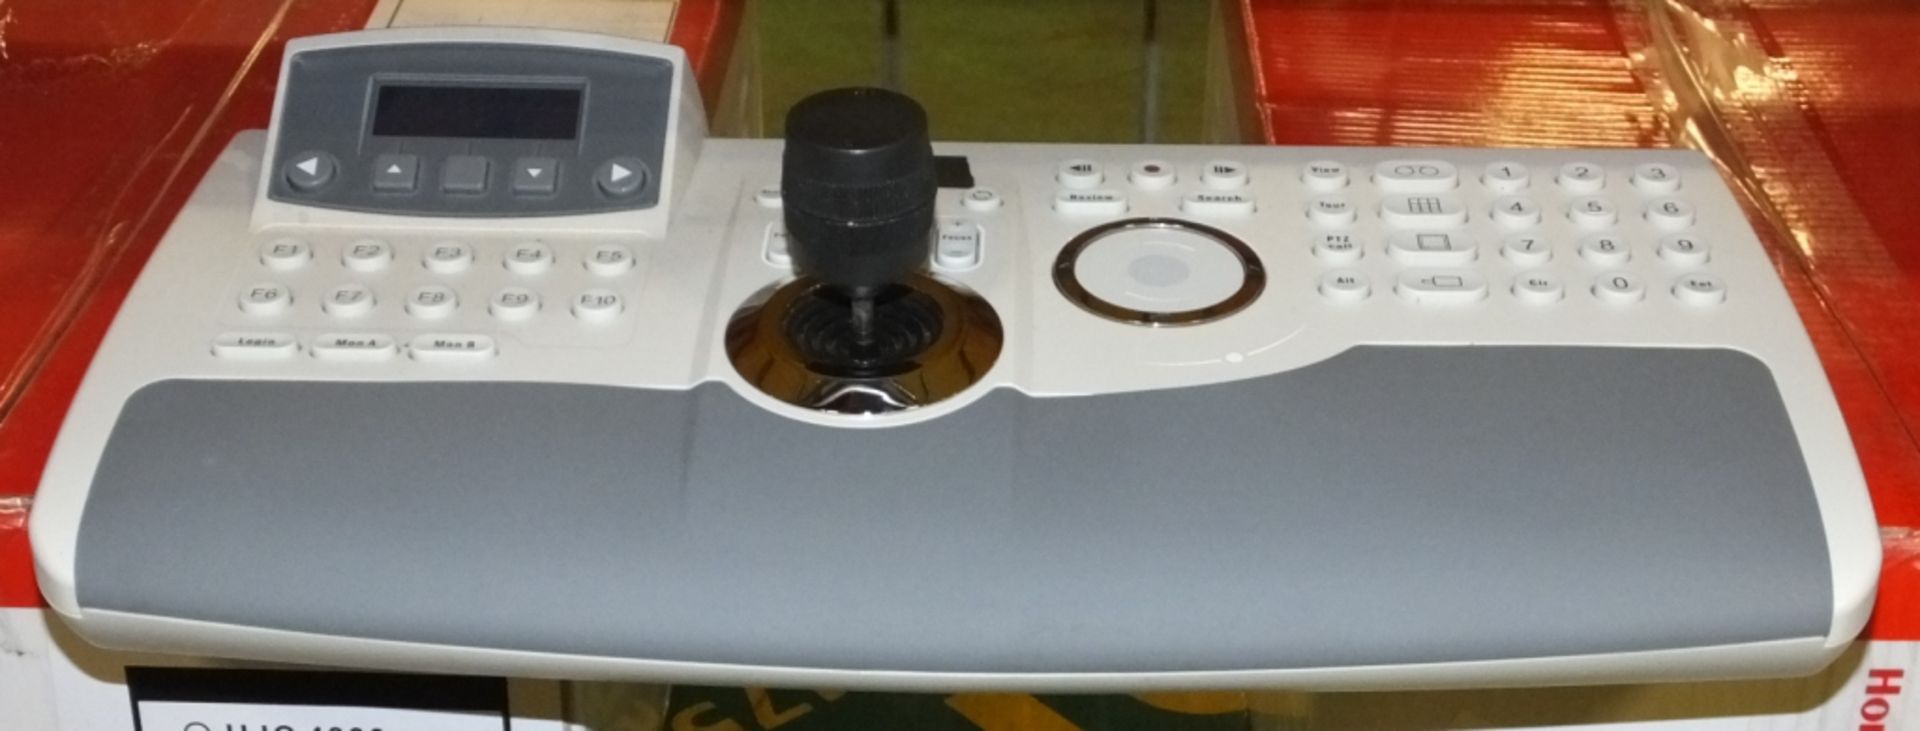 2x Honeywell HJC-5000 CCTV controller keyboards - Image 2 of 3